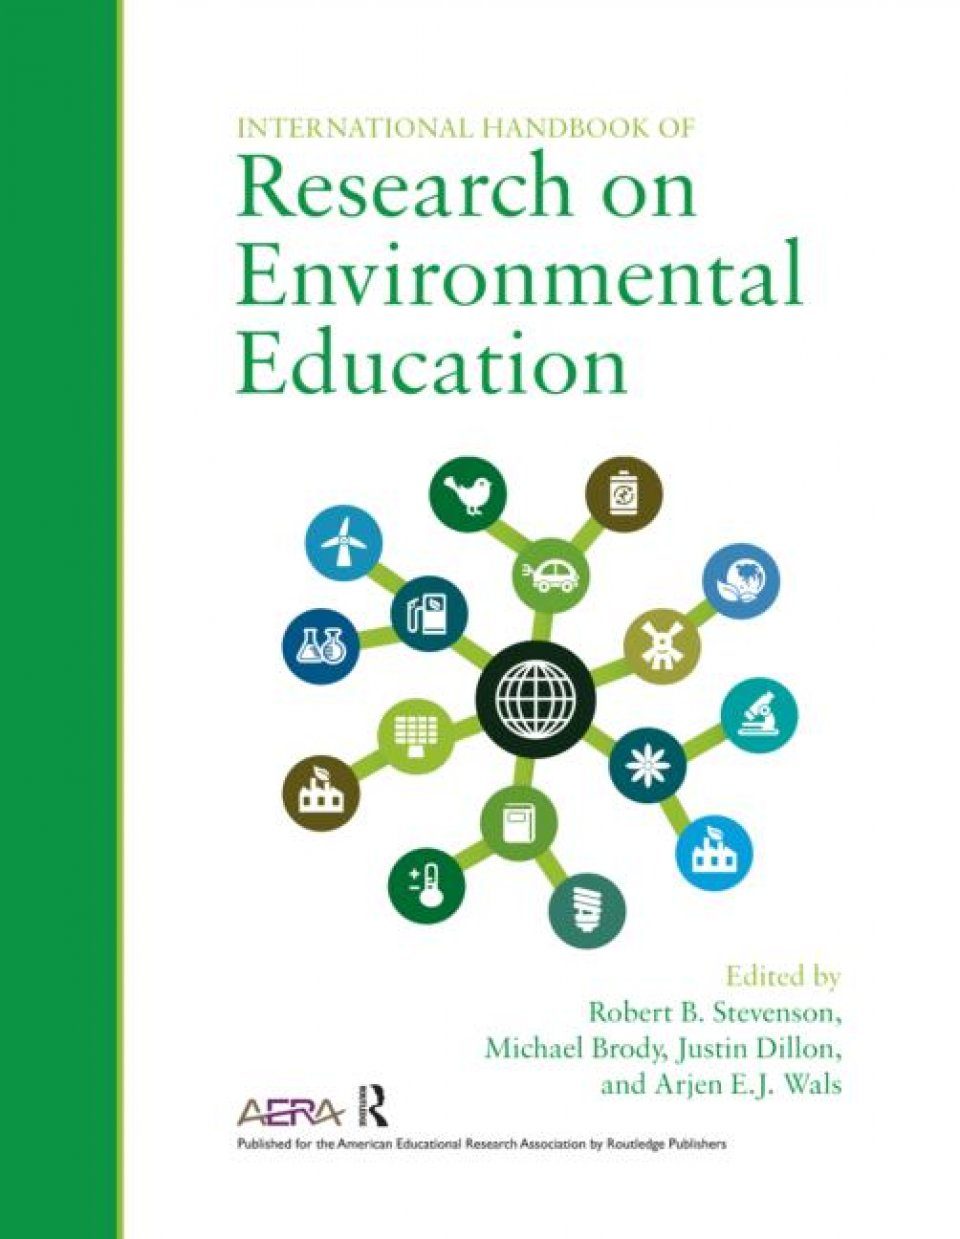 Environmental　NHBS　of　Research　Education　on　Handbook　Professional　Books　International　Academic